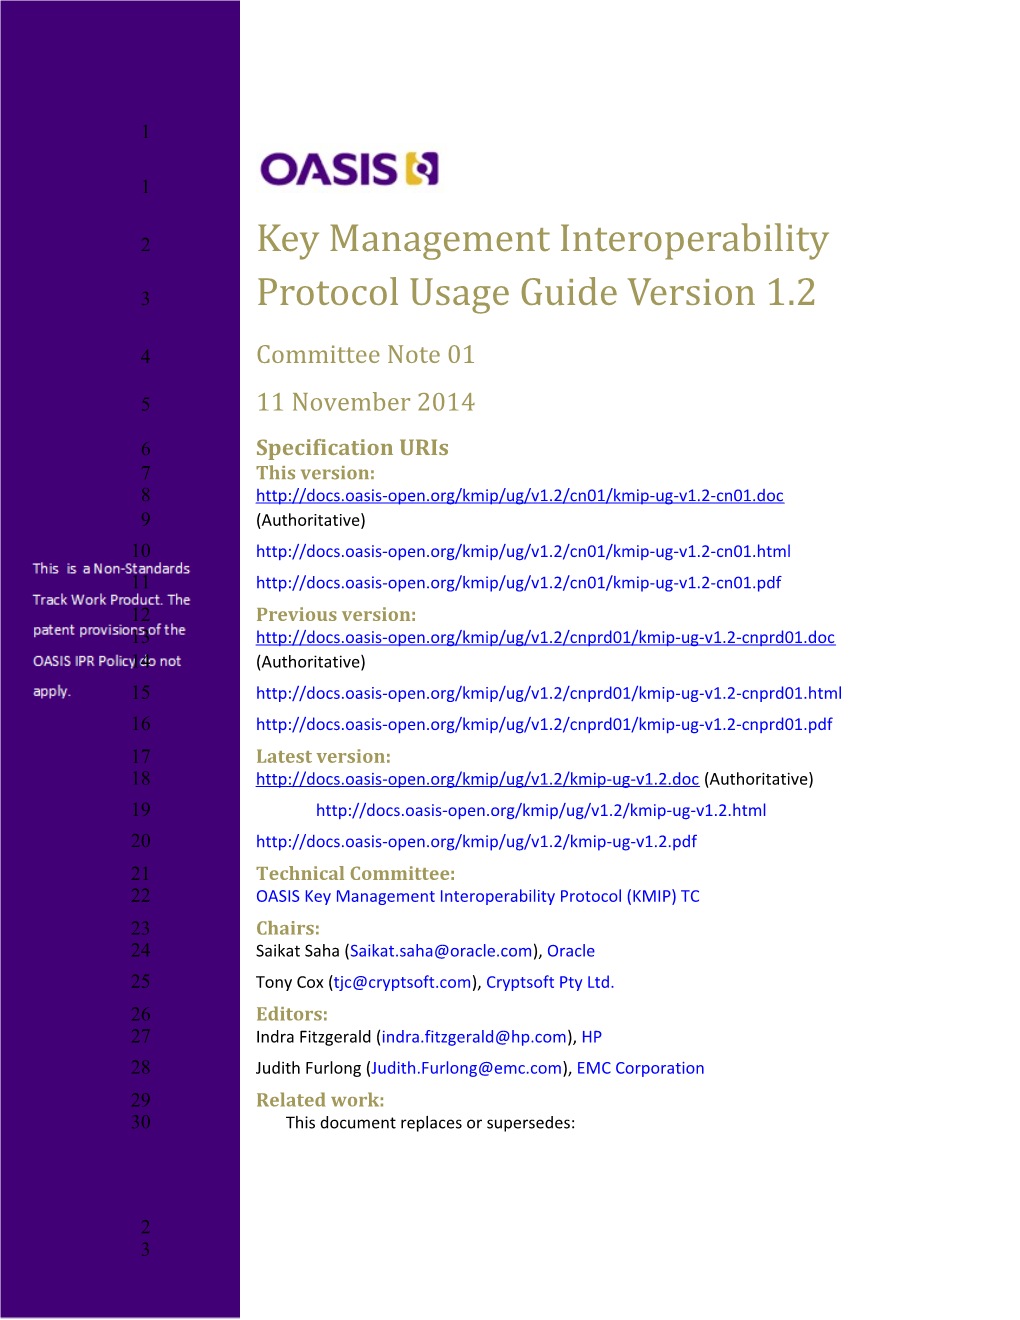 Key Management Interoperability Protocol Usage Guide Version 1.2